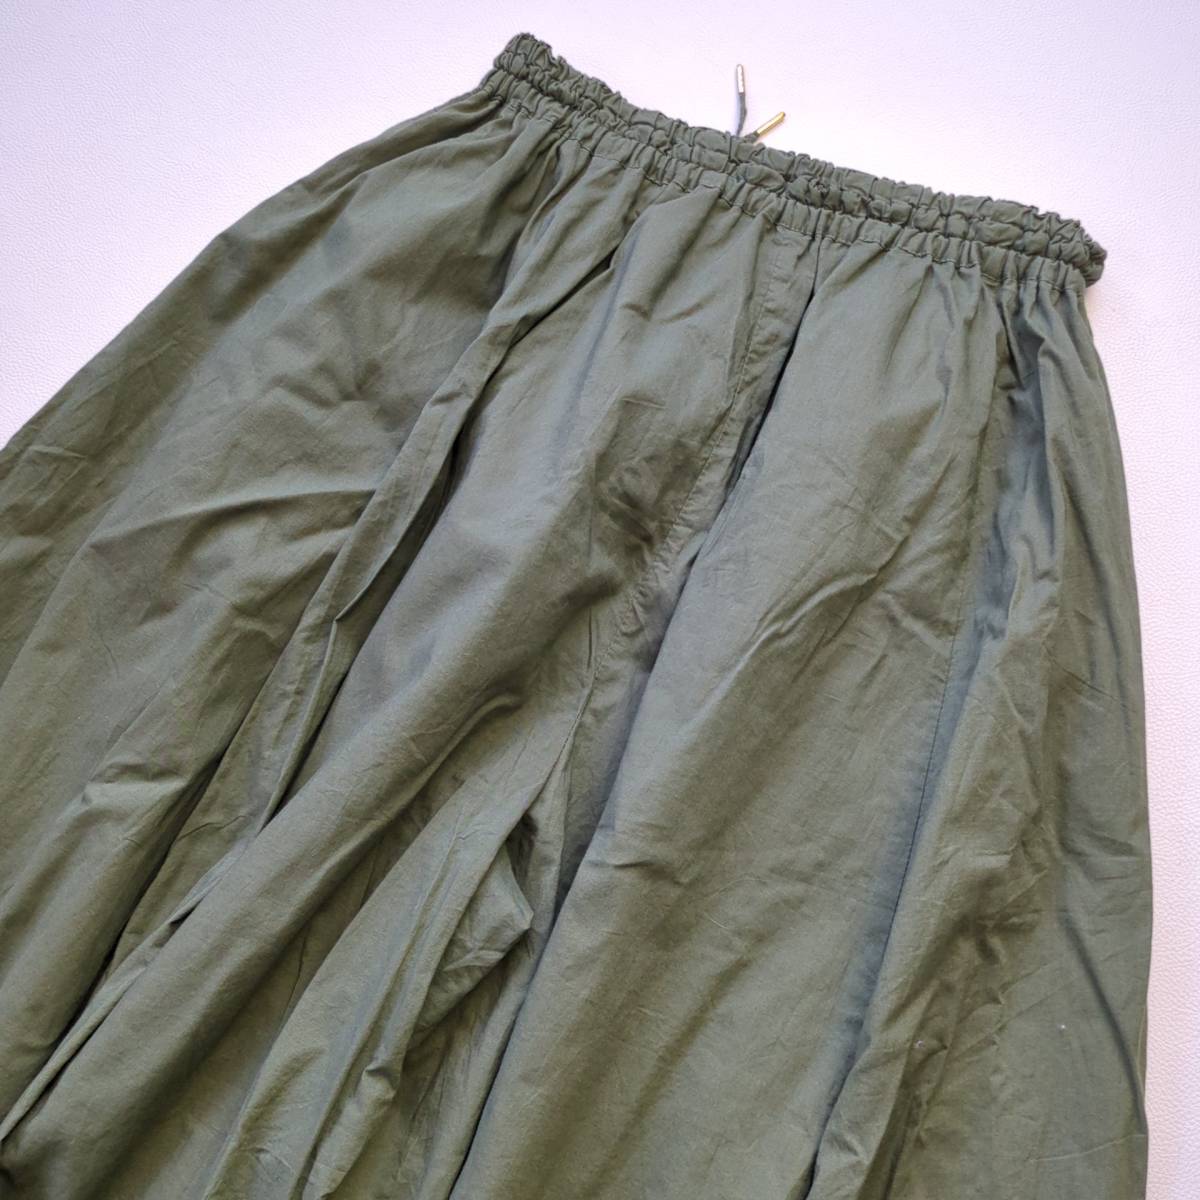 LEPSIMrepsi.m Lowrys Farm cotton .gya The - gaucho wide pants khaki F lady's waist rubber 